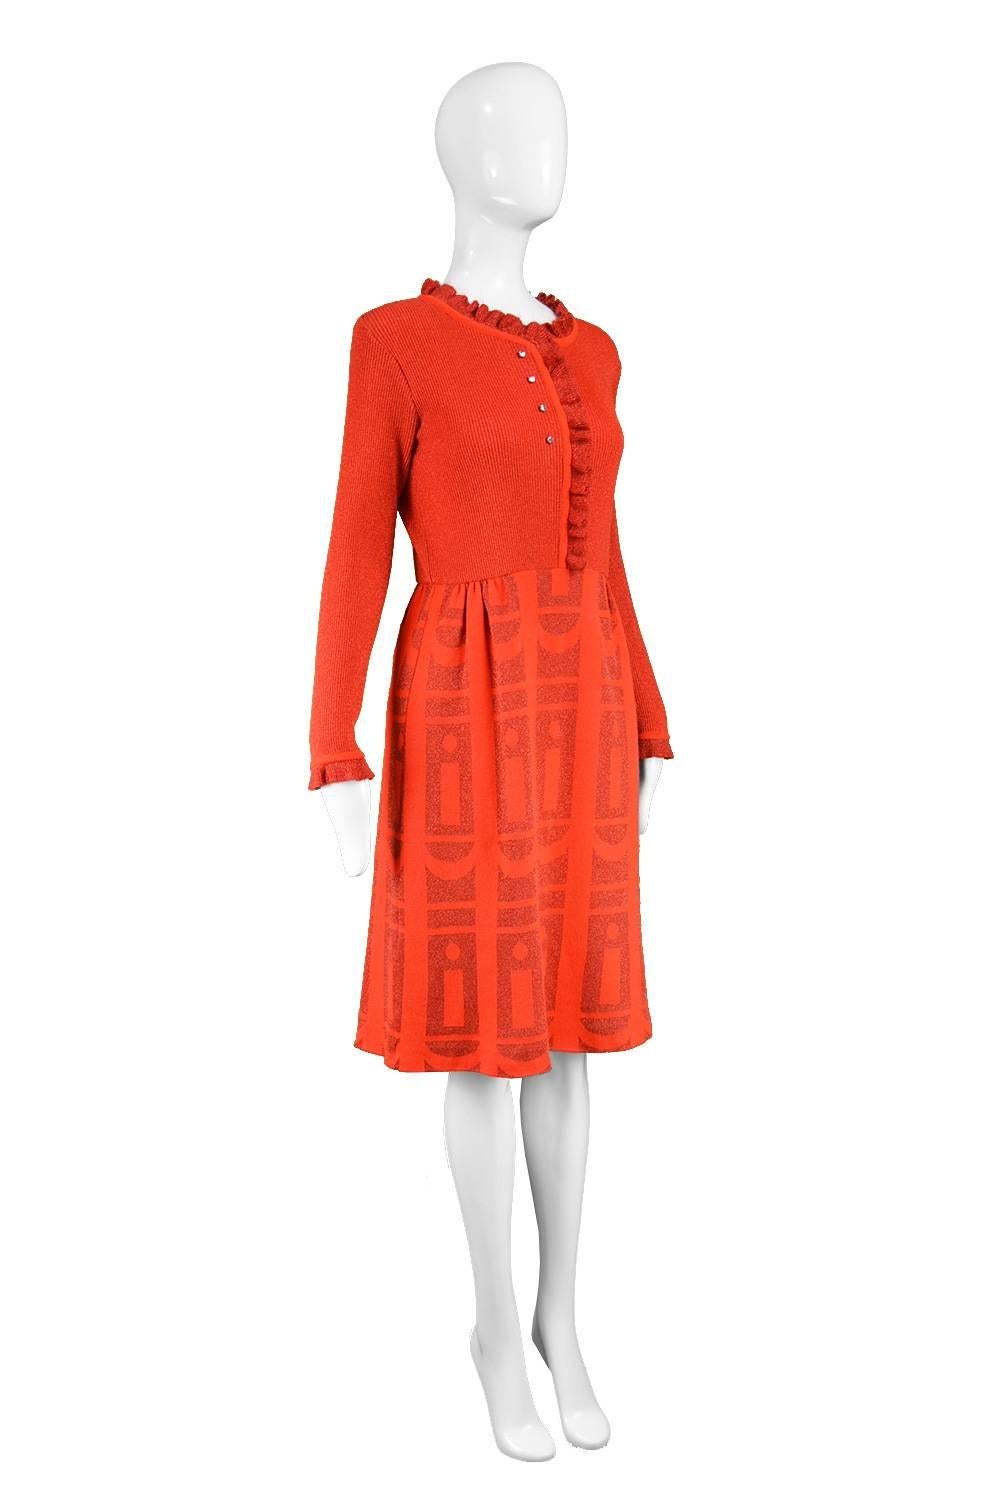 Louis Feraud 1970s Vintage Red Knit Dress For Sale 2